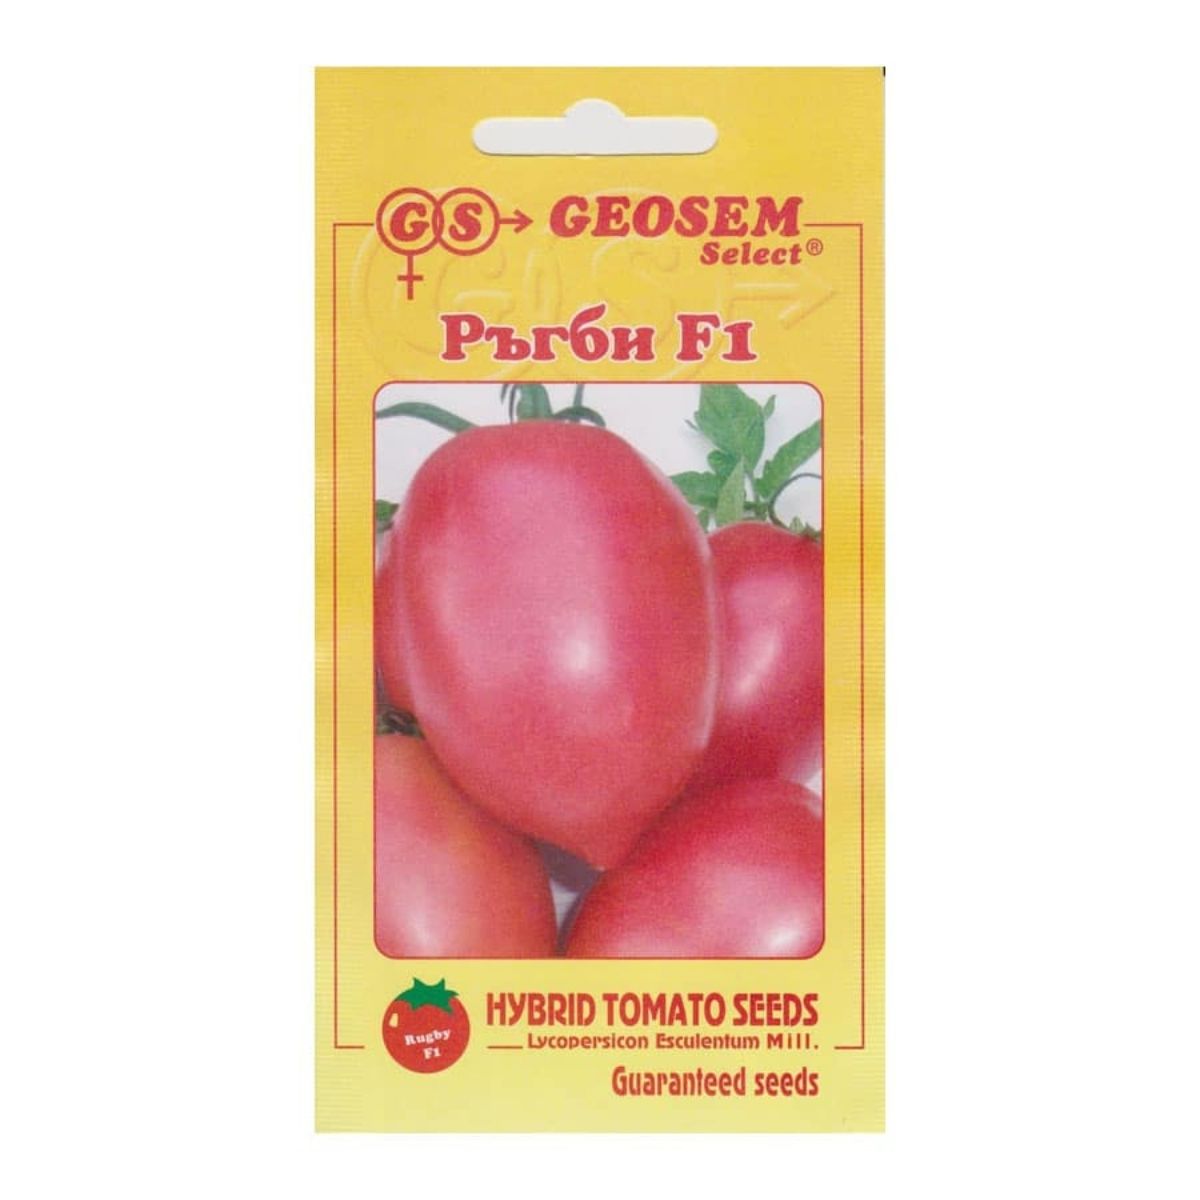 Tomate - Seminte Tomate semi-timpurii RUGBY GeosemSelect 50 sem, hectarul.ro